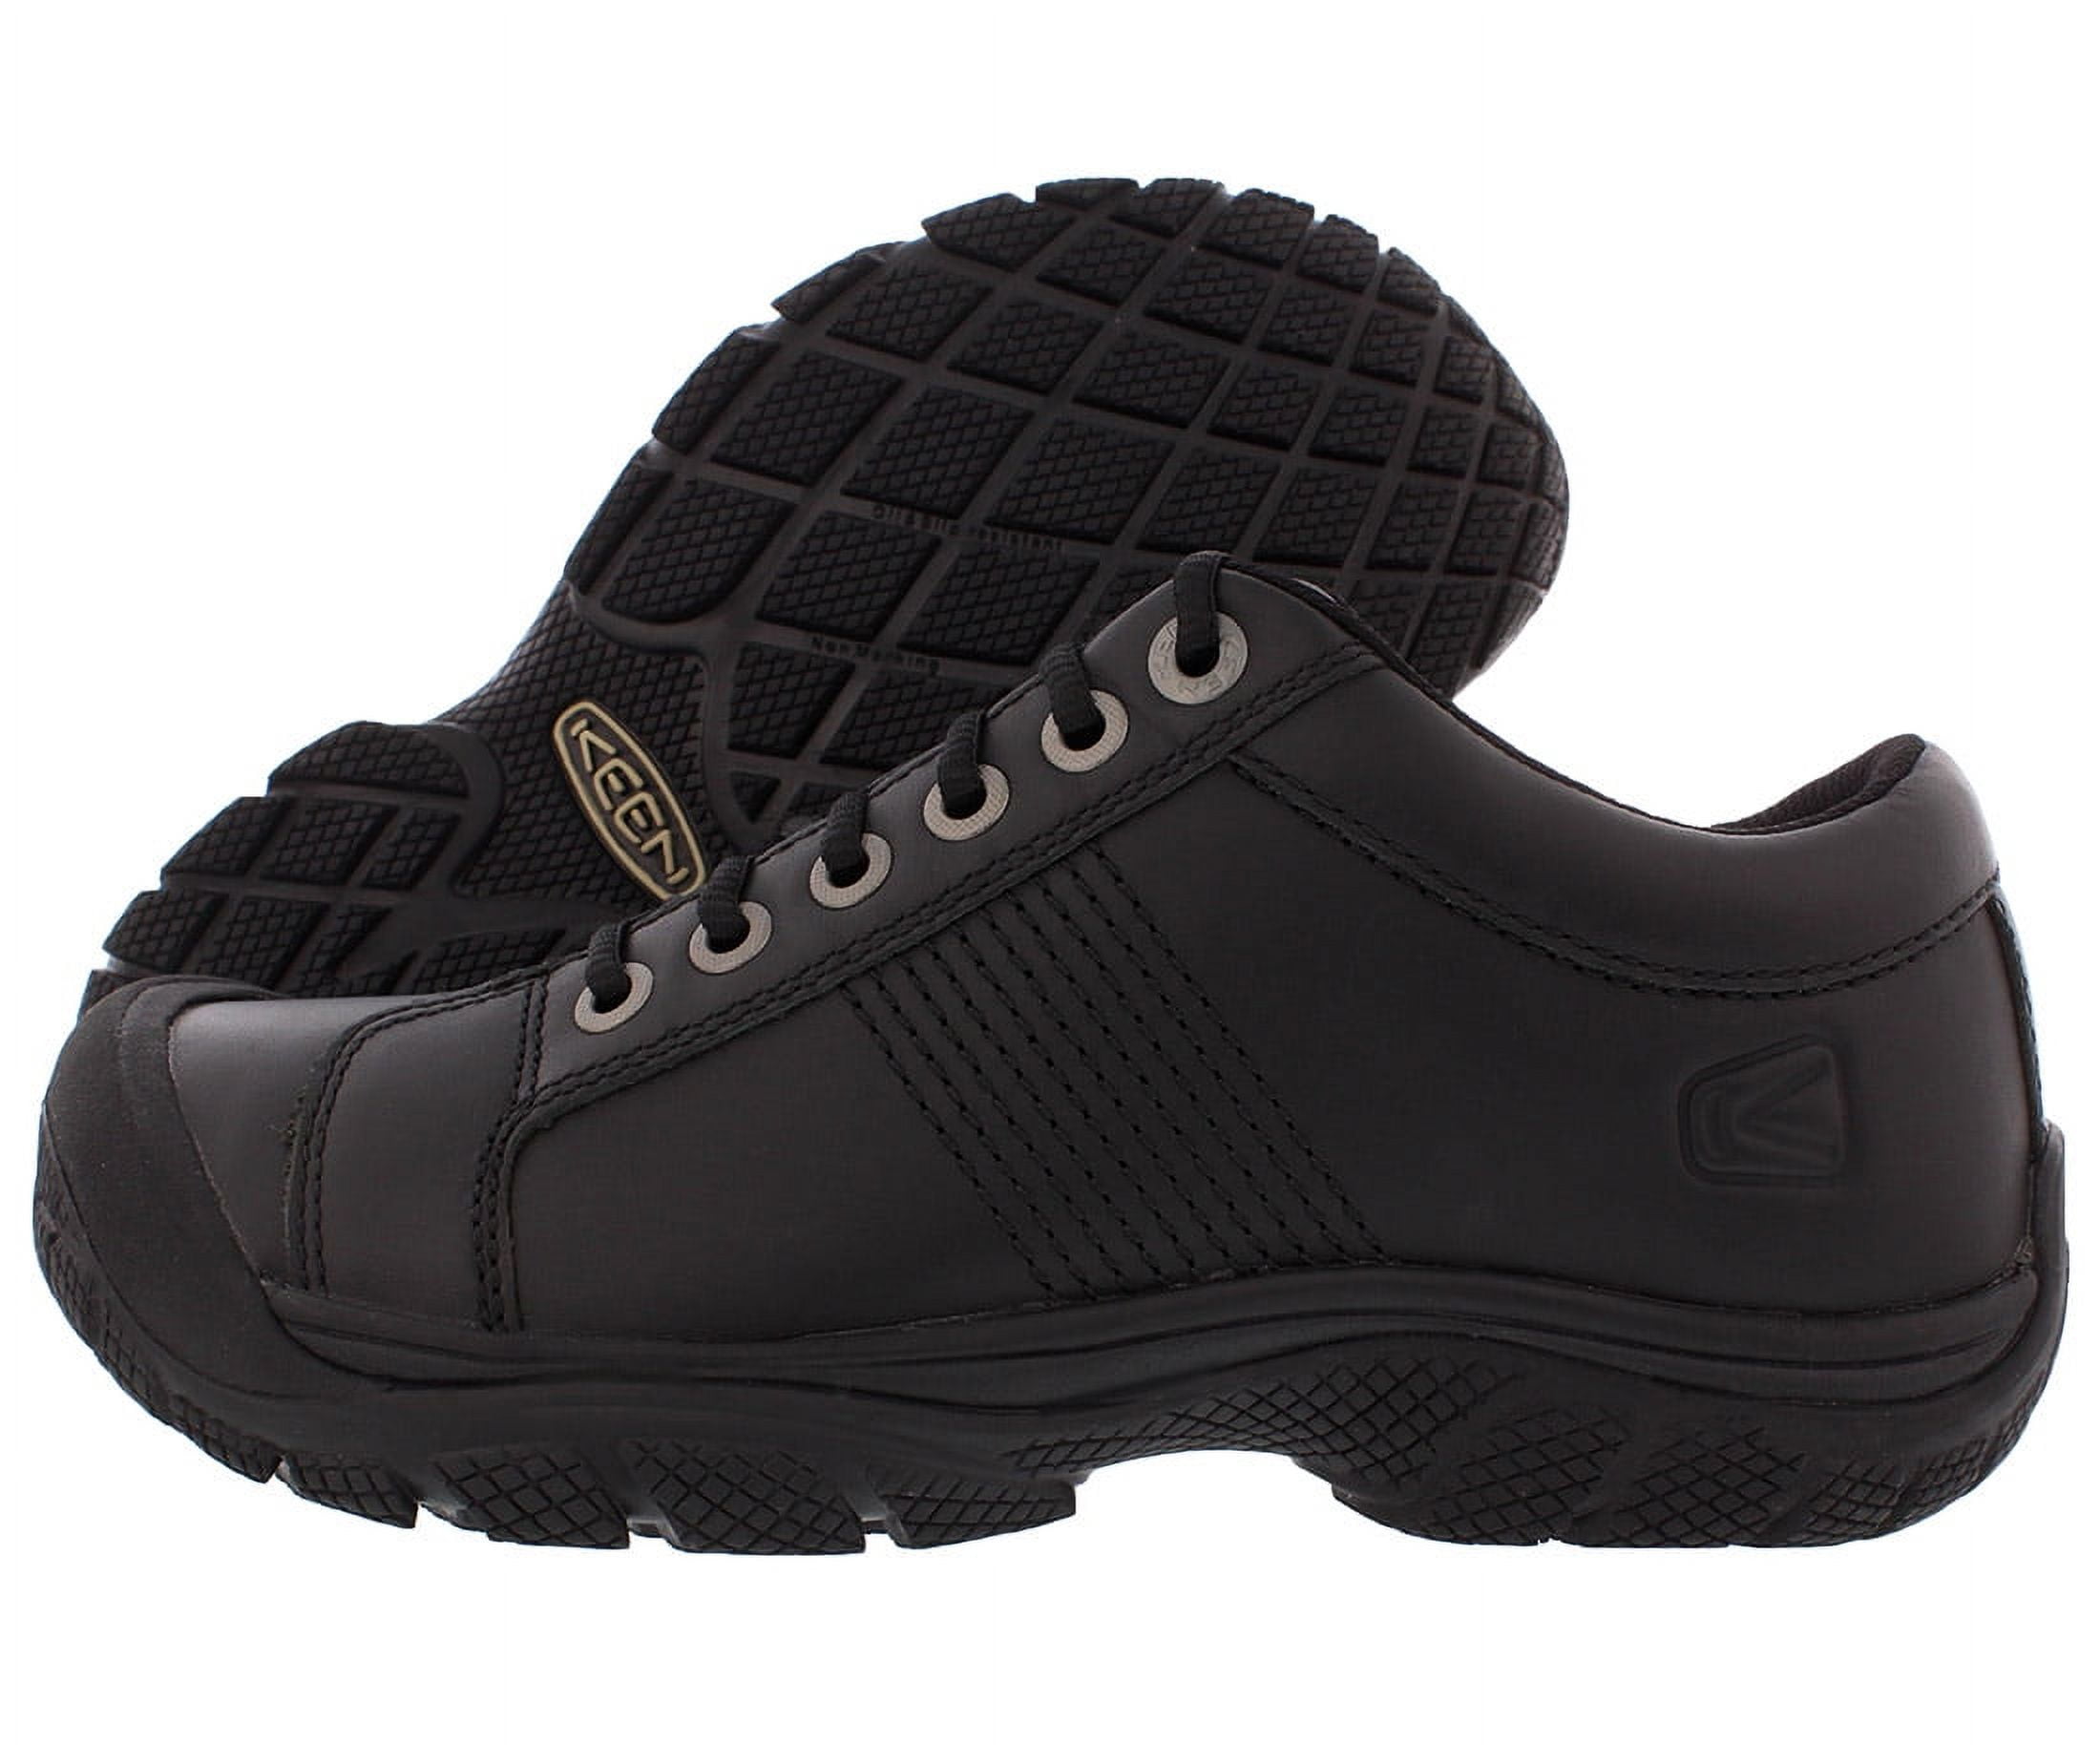 Keen Ptc Oxford Athletic Mens Shoe Size 8, Color: Black - Walmart.com